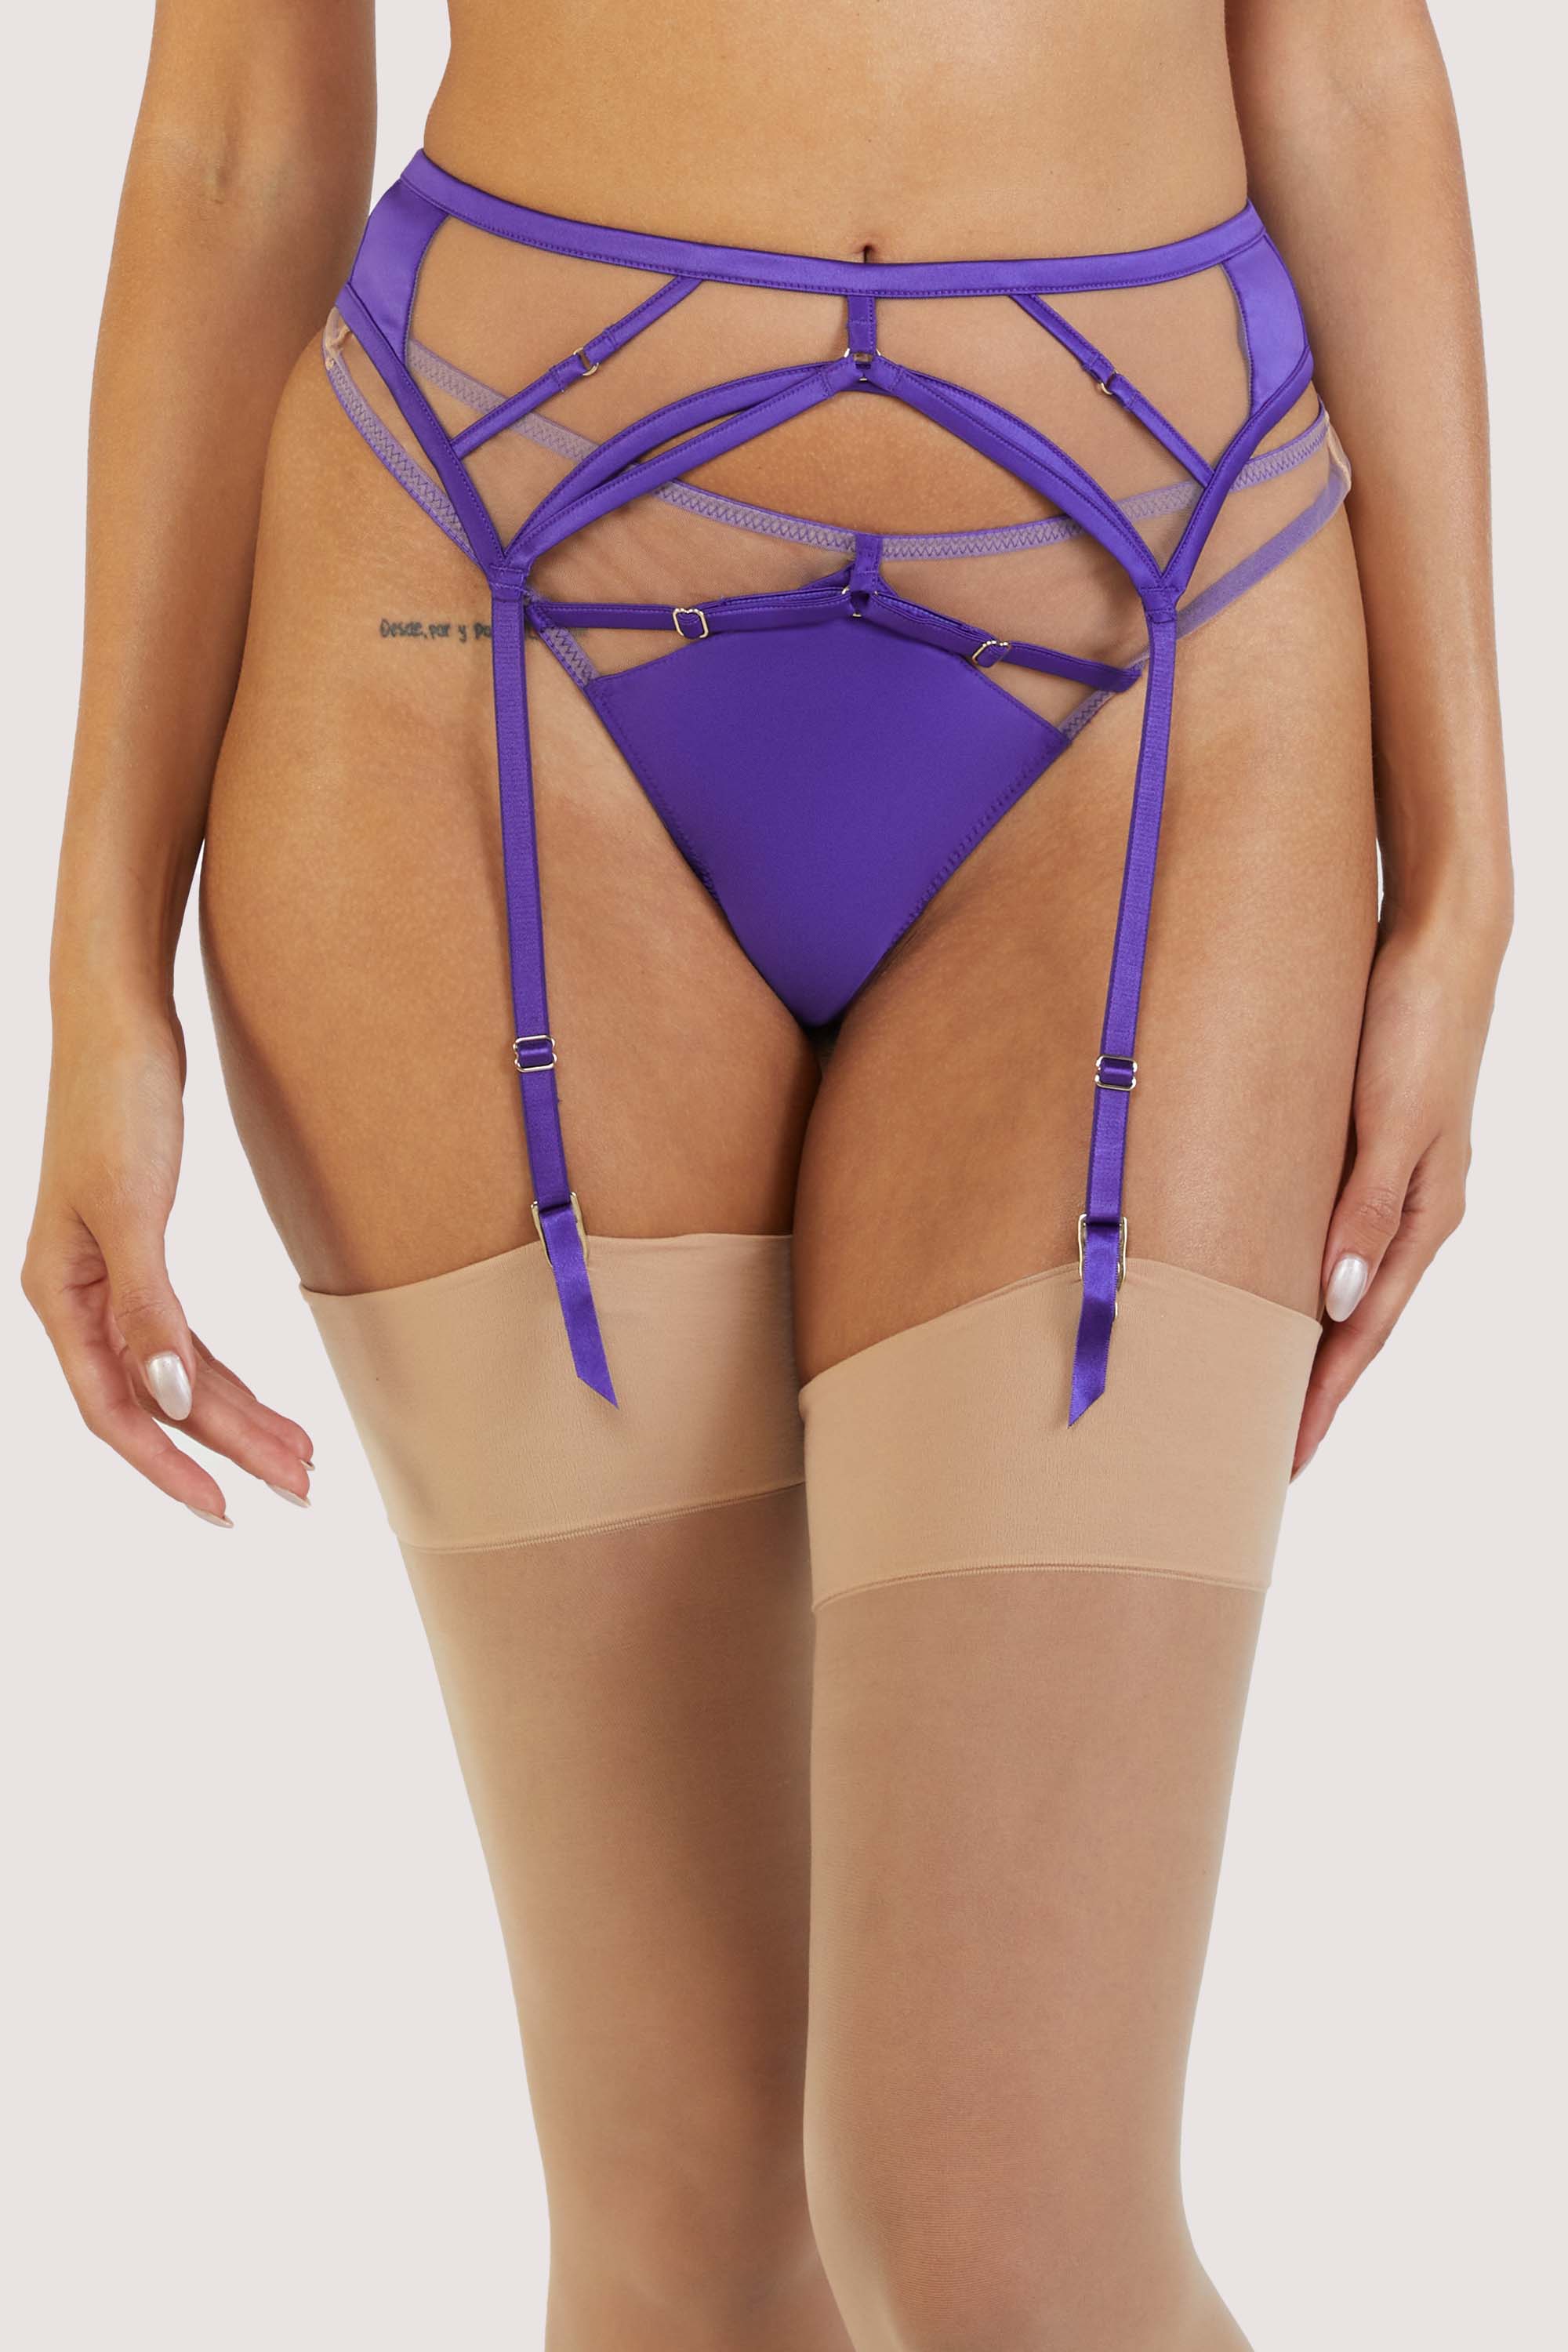 Ramona Purple Strap Detail Illusion Mesh Suspender 20